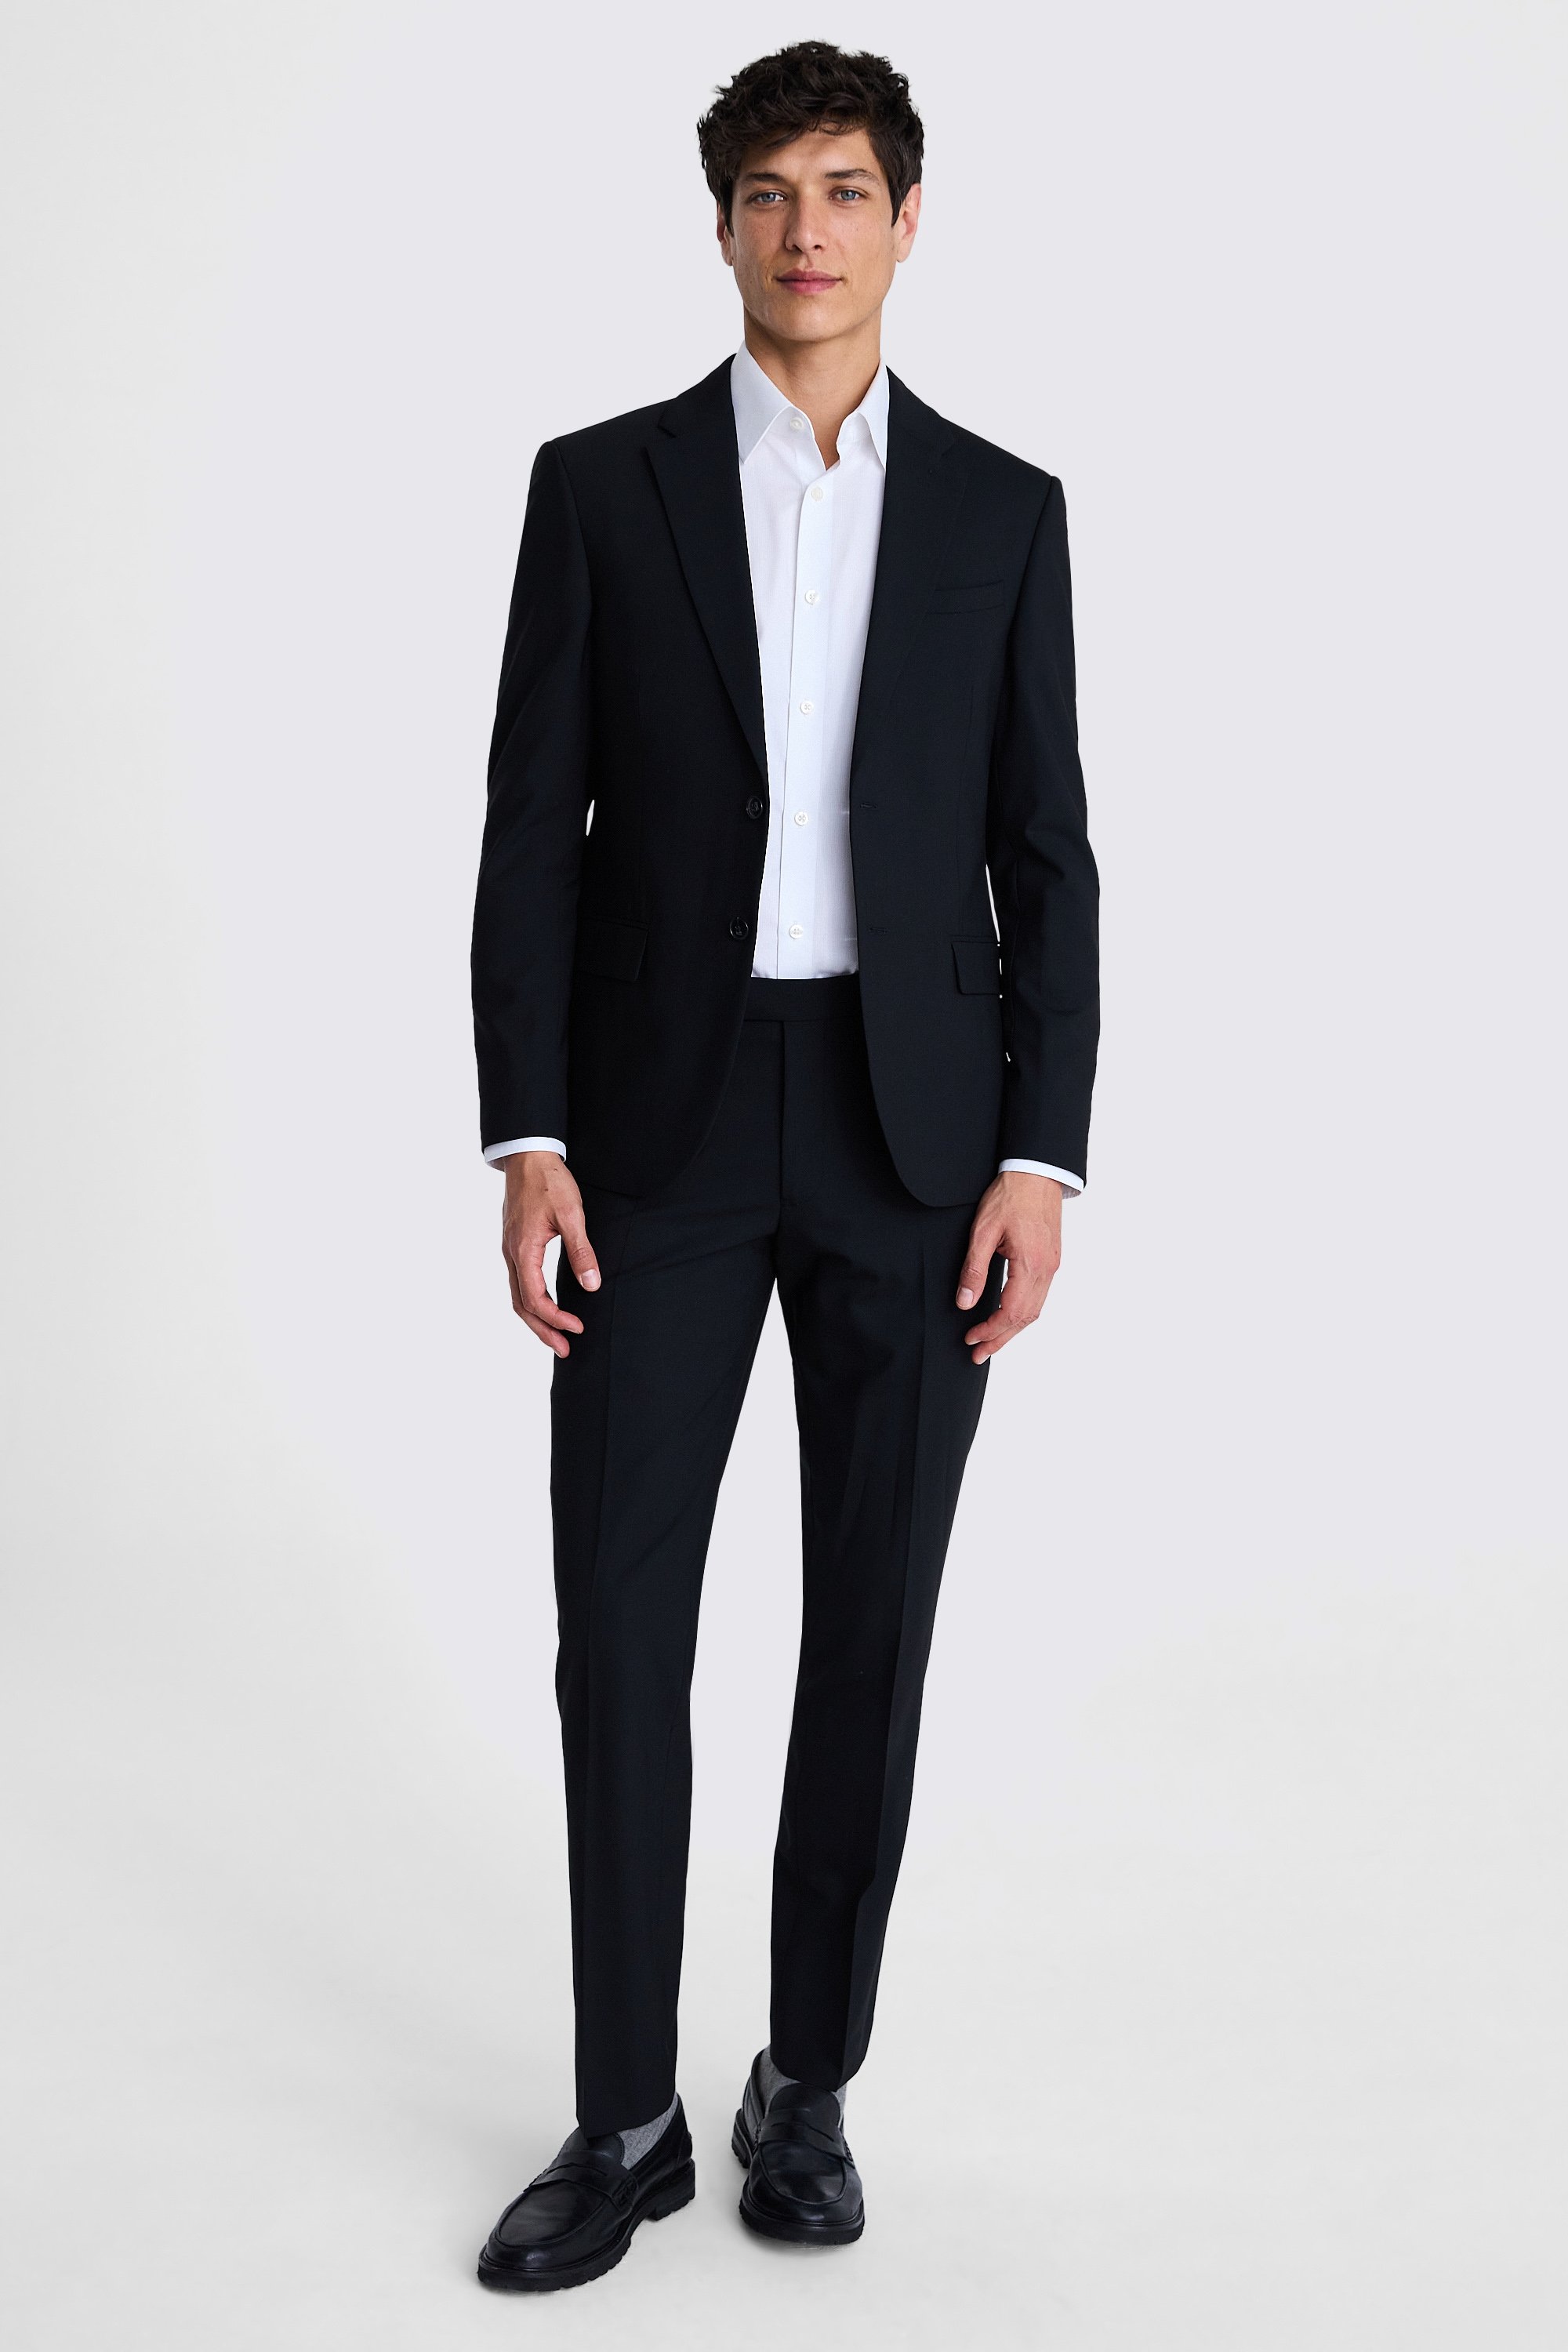 DKNY Slim Fit Black Jacket | Buy Online at Moss